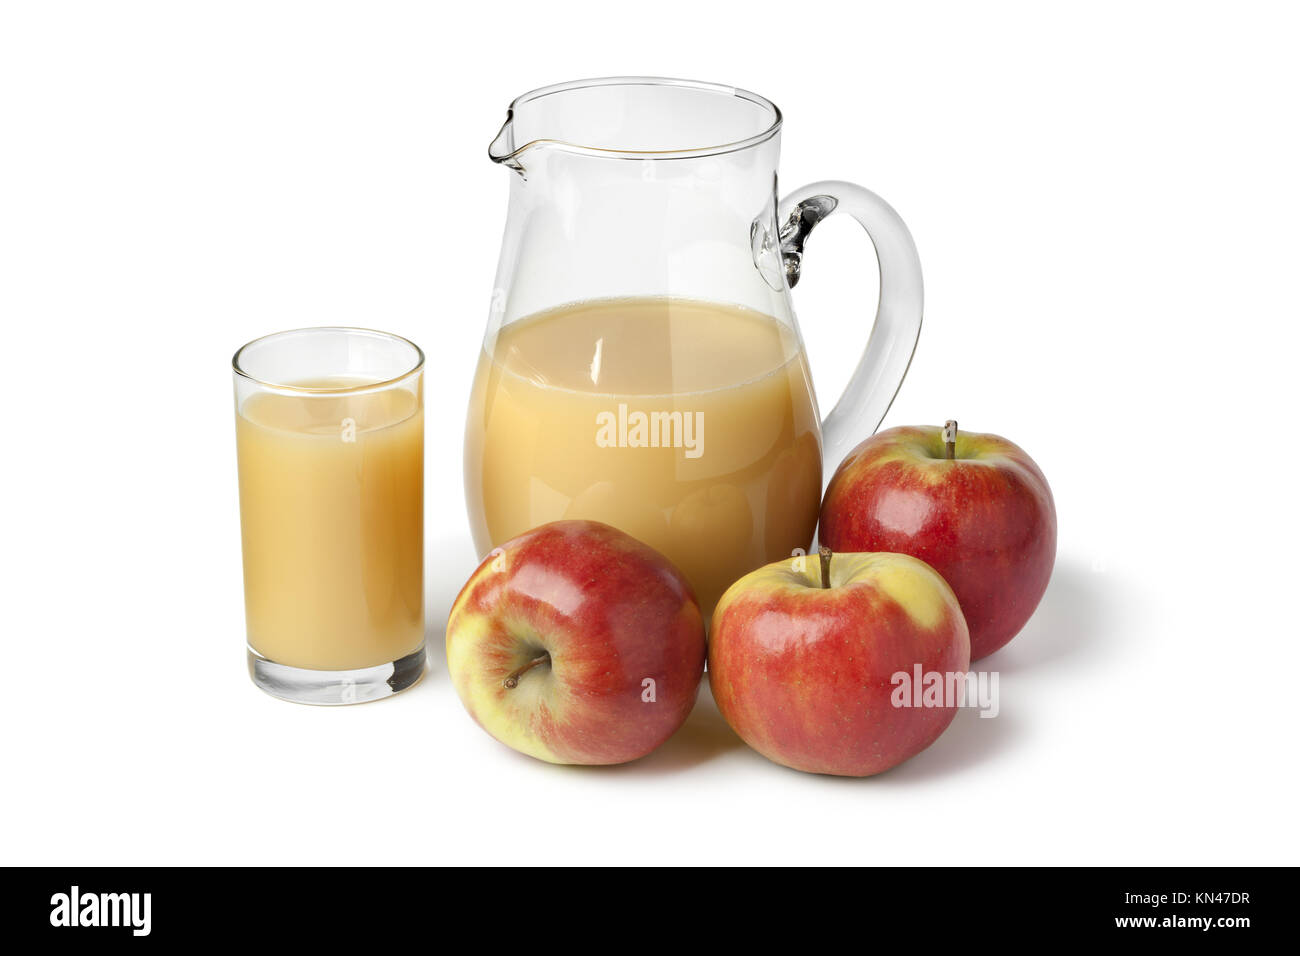 https://c8.alamy.com/comp/KN47DR/fresh-apple-juice-in-a-jar-on-white-background-KN47DR.jpg